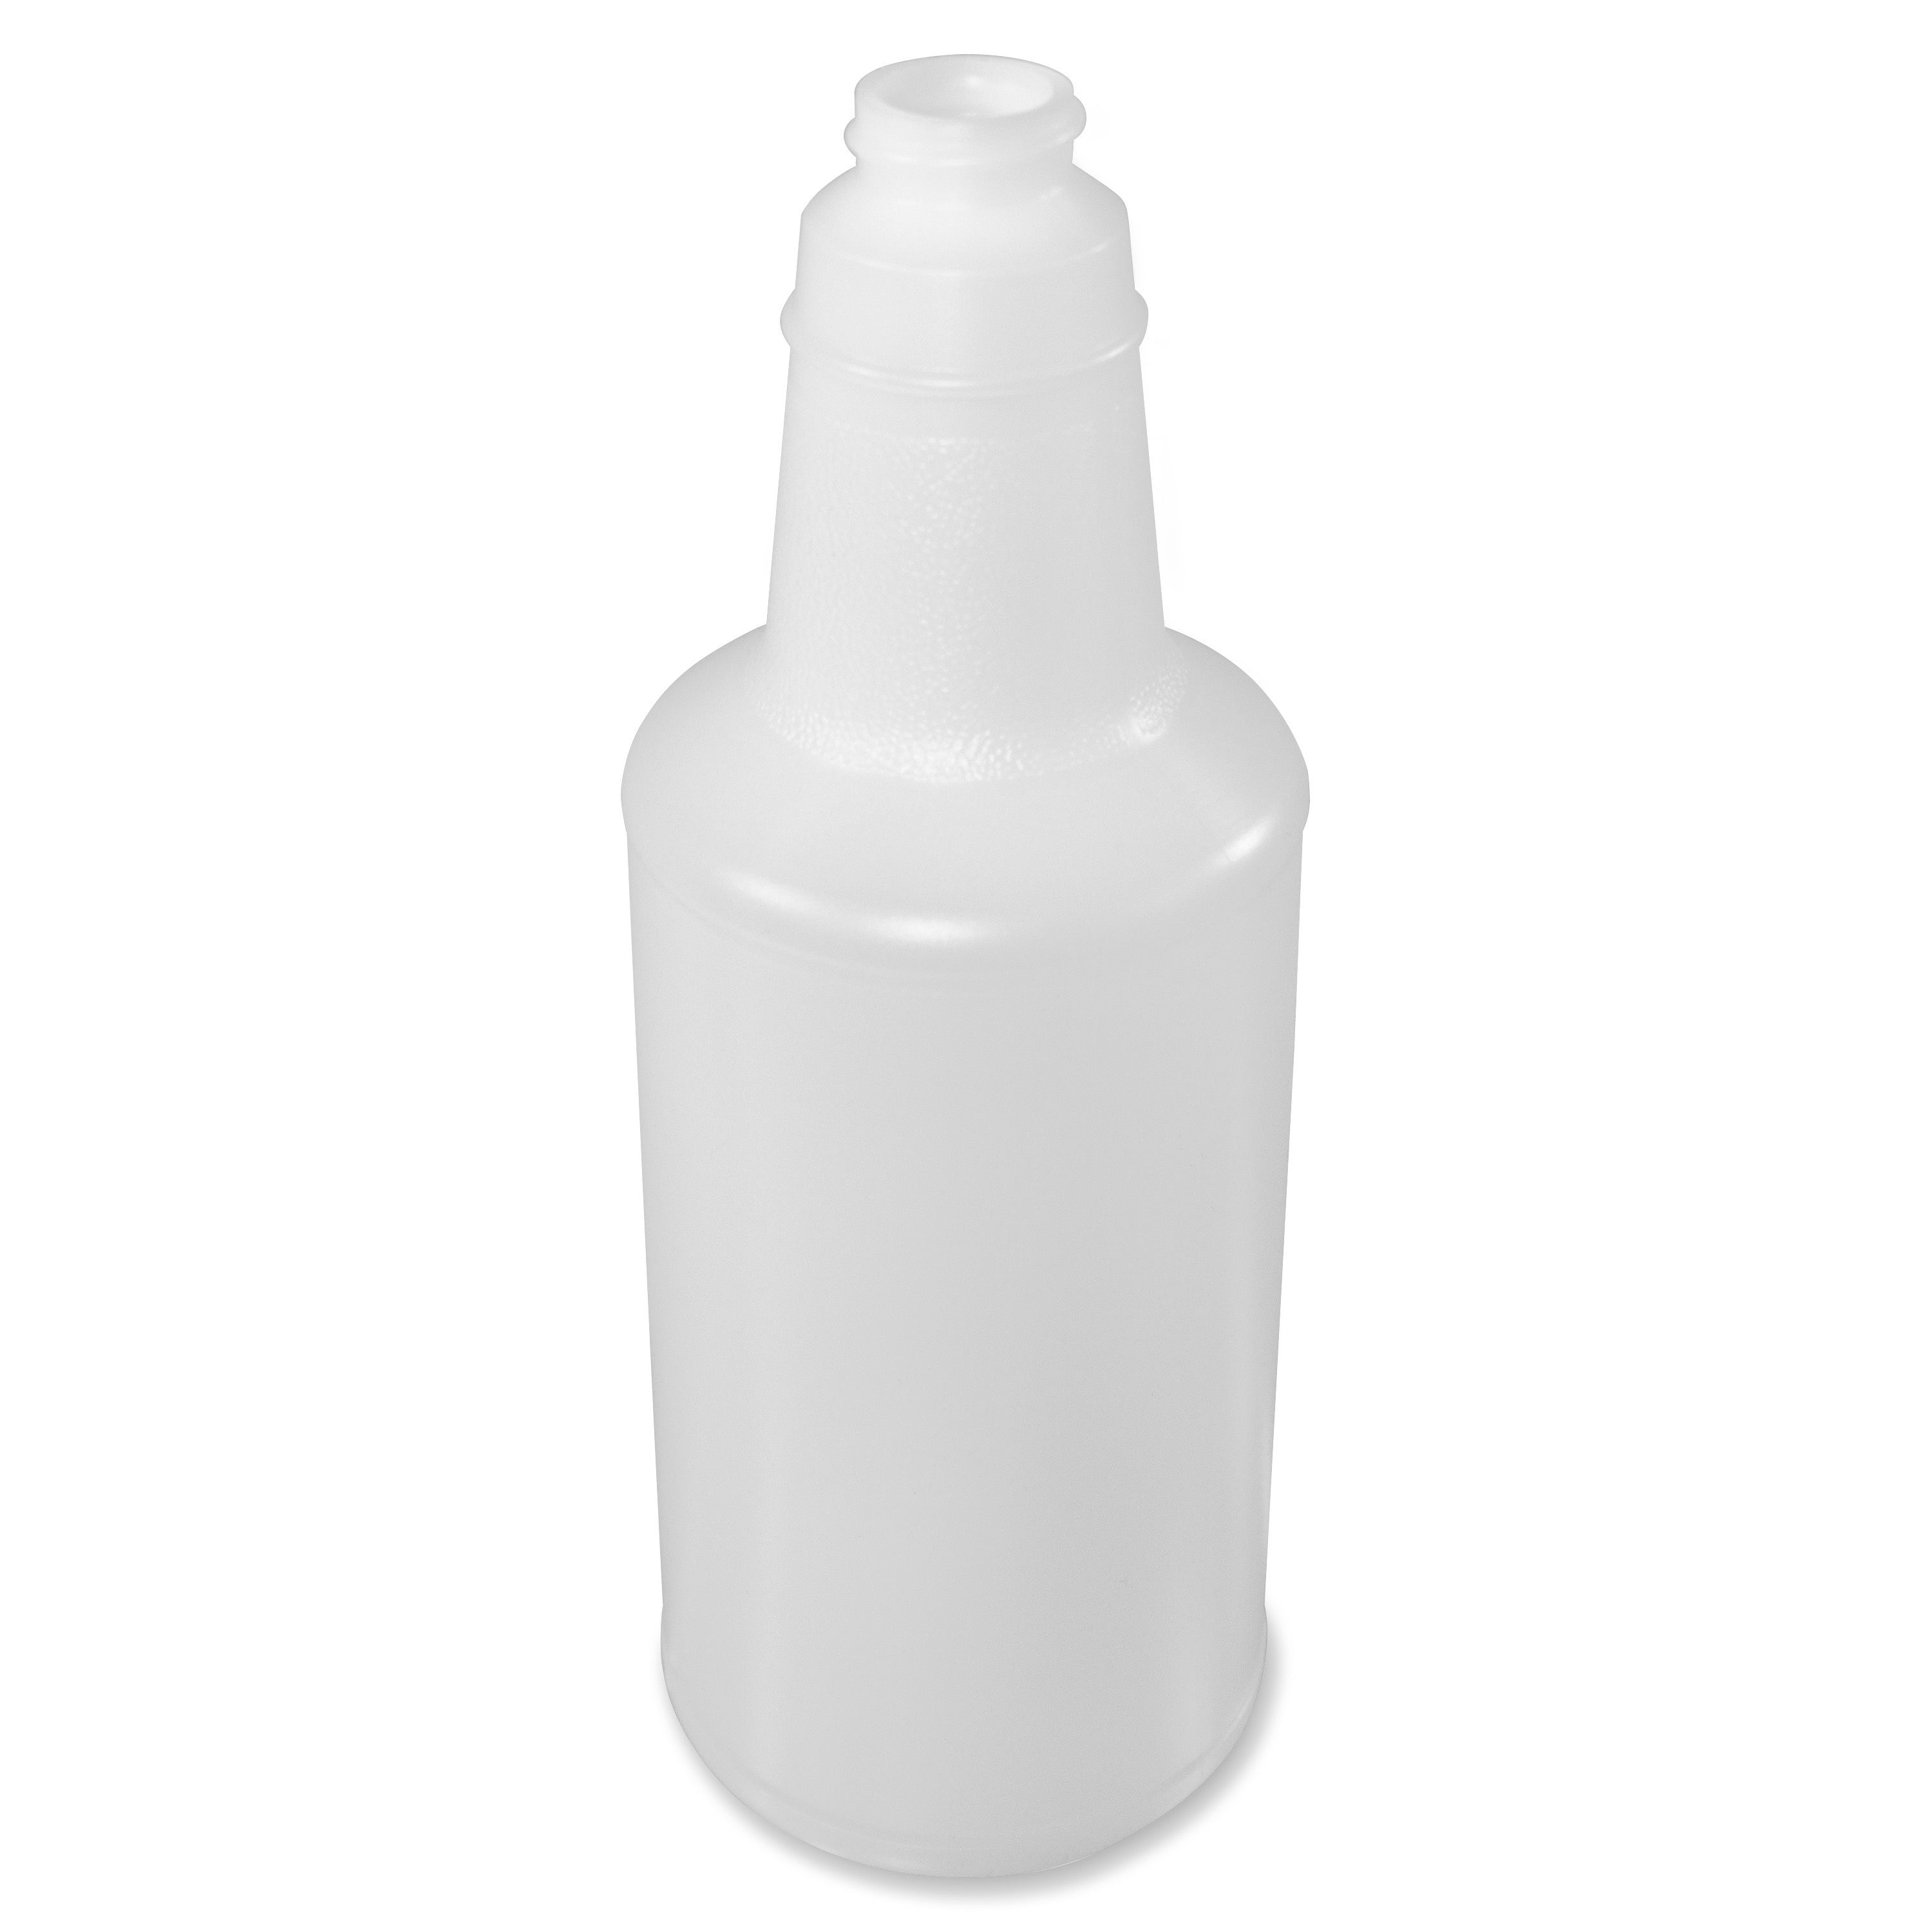 Genuine Joe Plastic Bottle with Graduations - 1 Each - Translucent - Plastic - 1